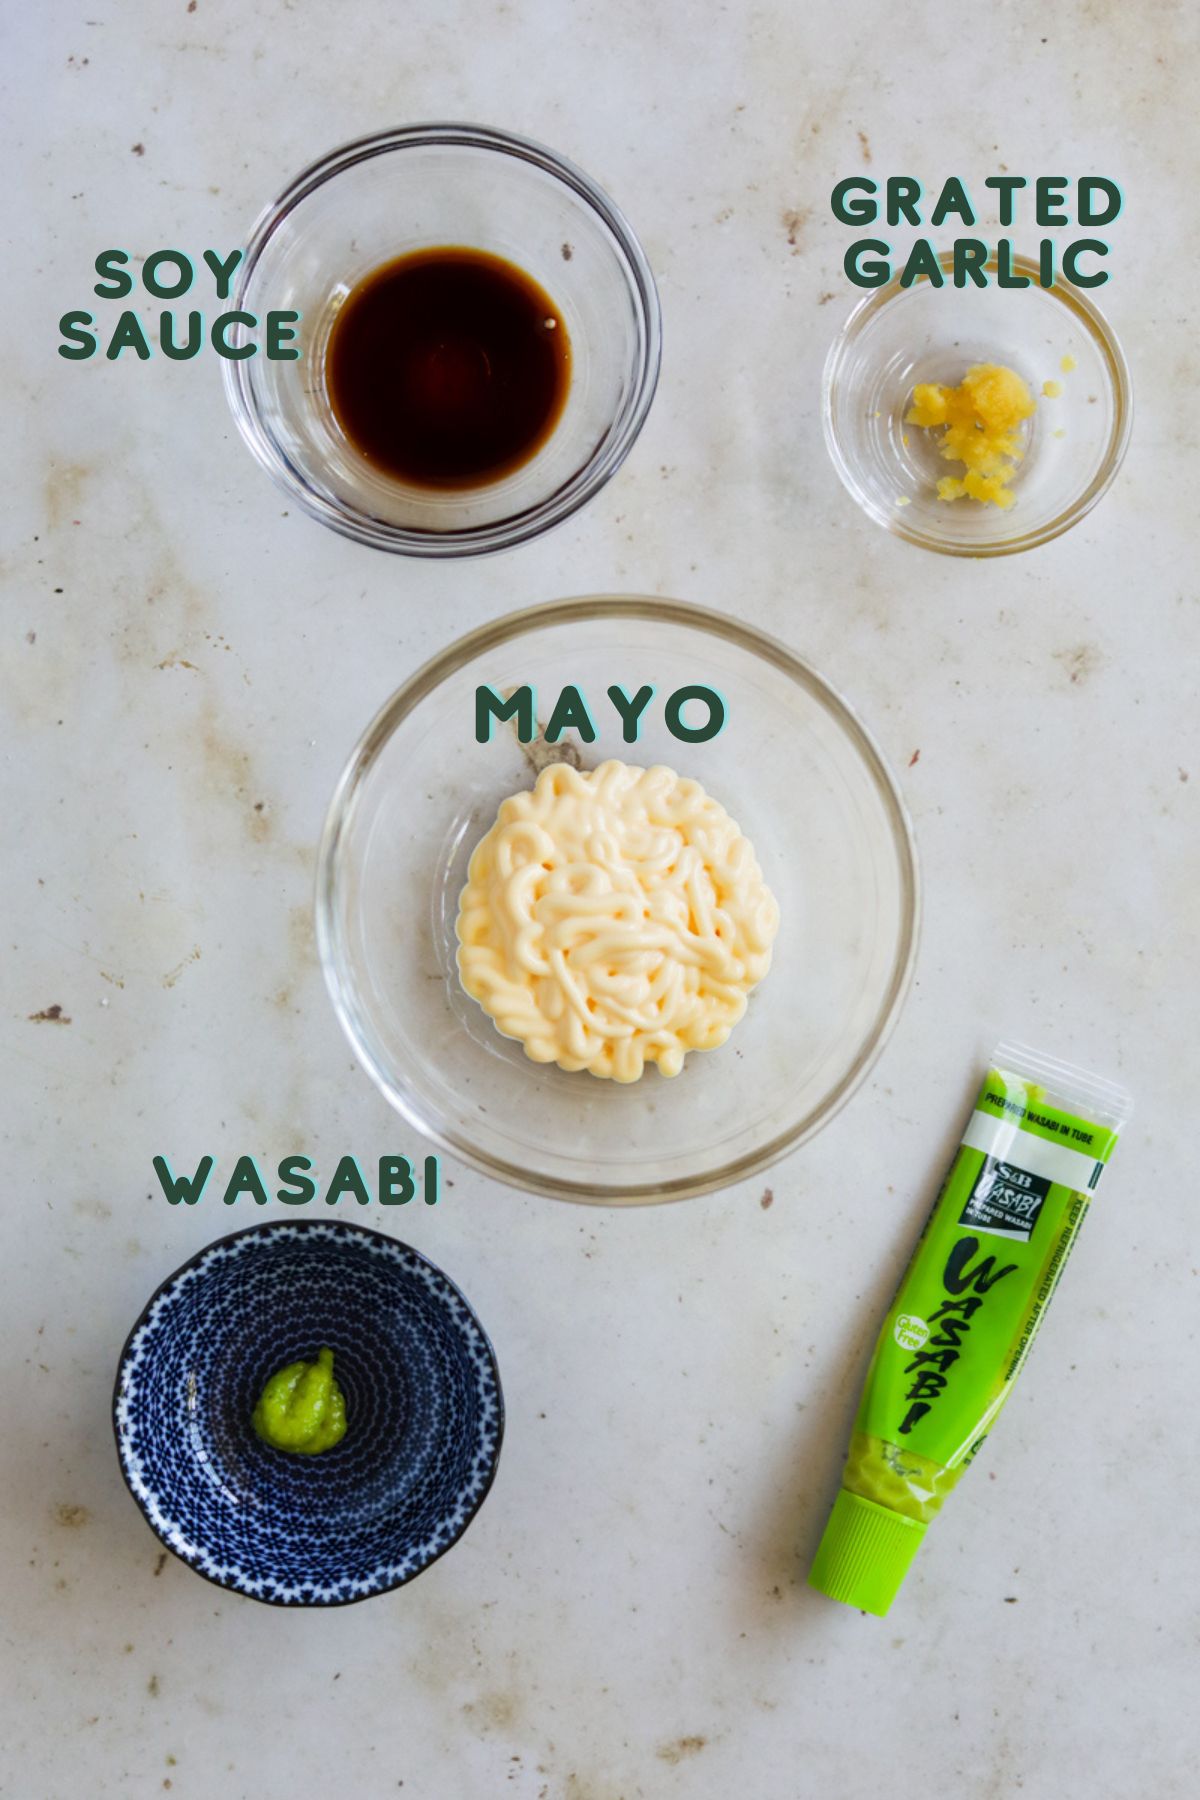 Ingredients for wasabi aioli mayo sauce.